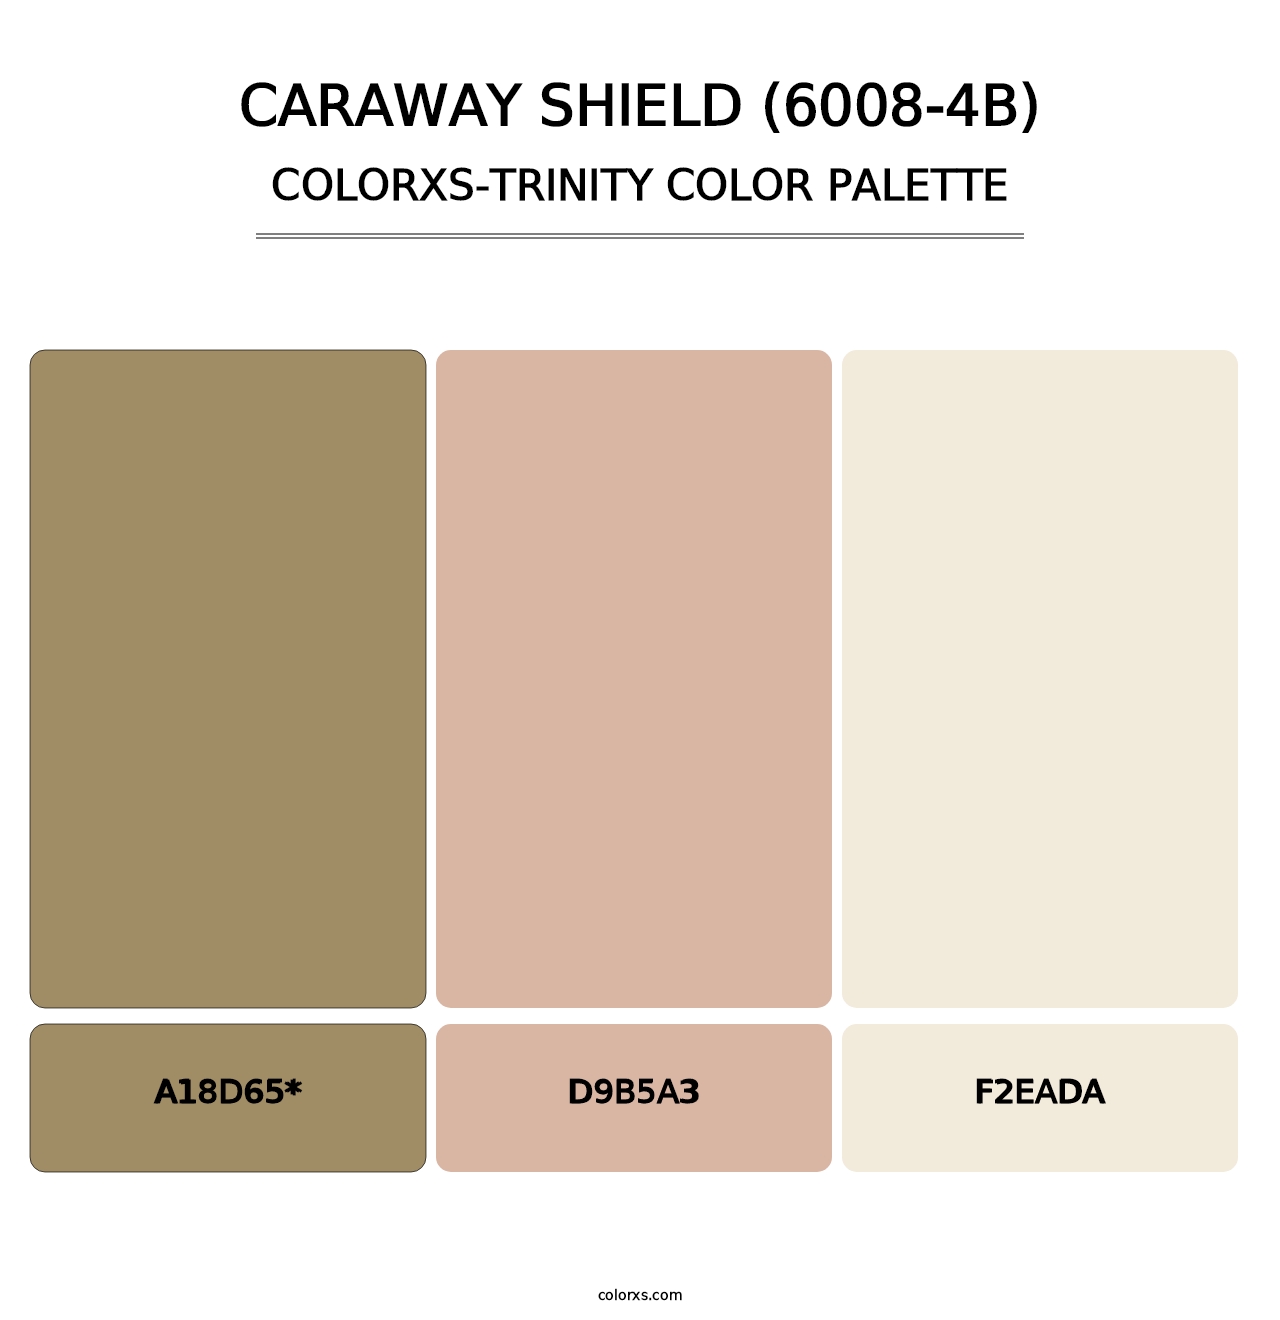 Caraway Shield (6008-4B) - Colorxs Trinity Palette